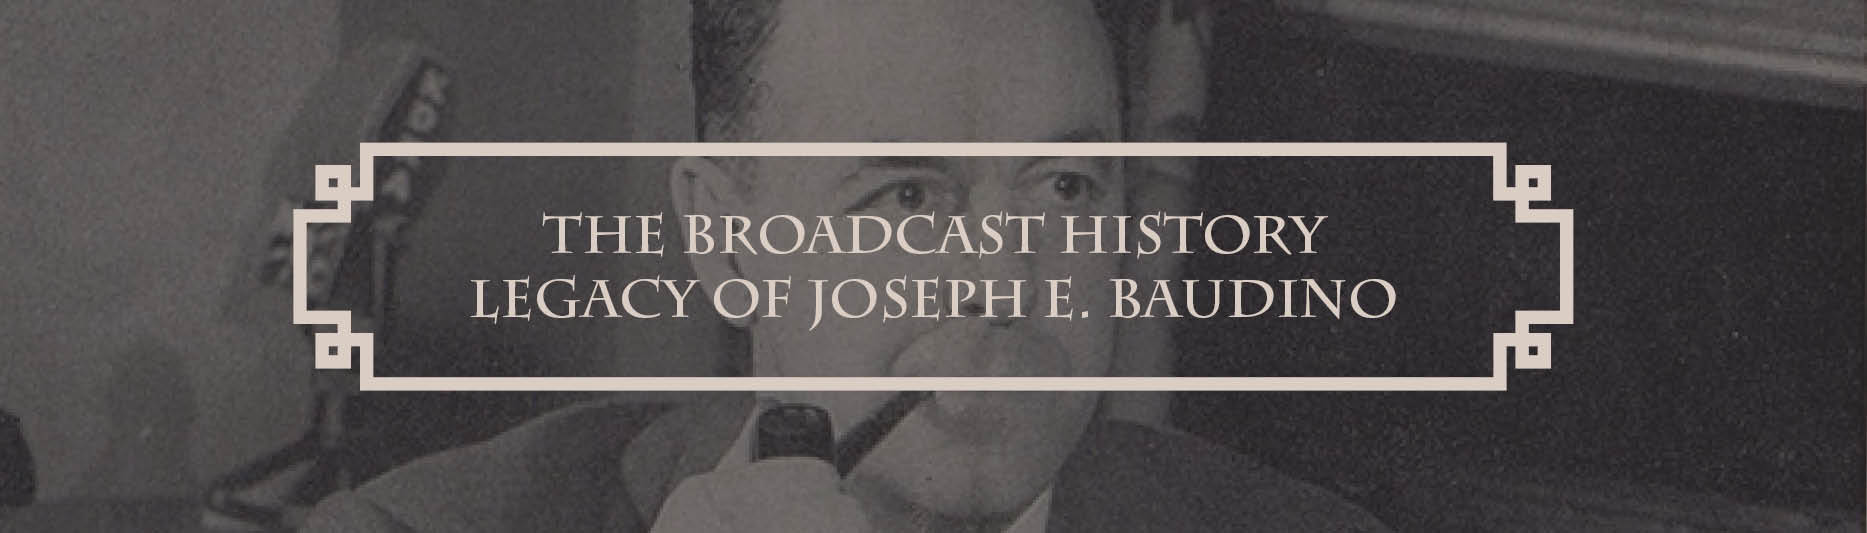 The Broadcast History Legacy of Joseph Baudino